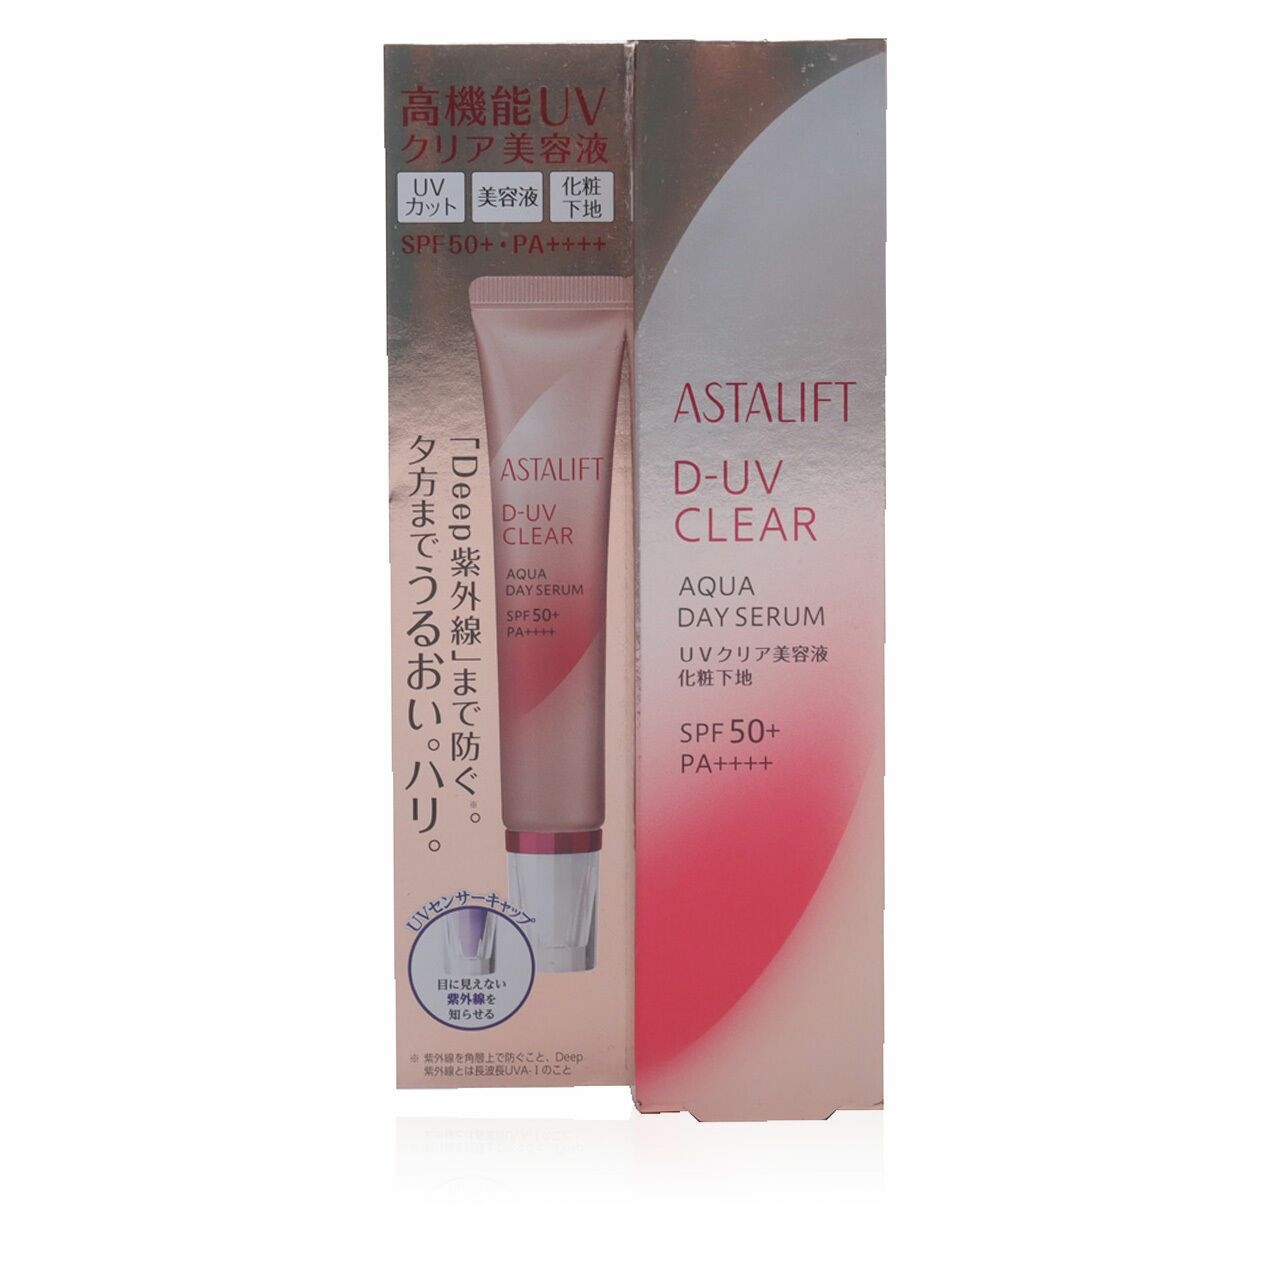 Private Collection Astalift D-UV Clear Aqua Day Serum Skin Care